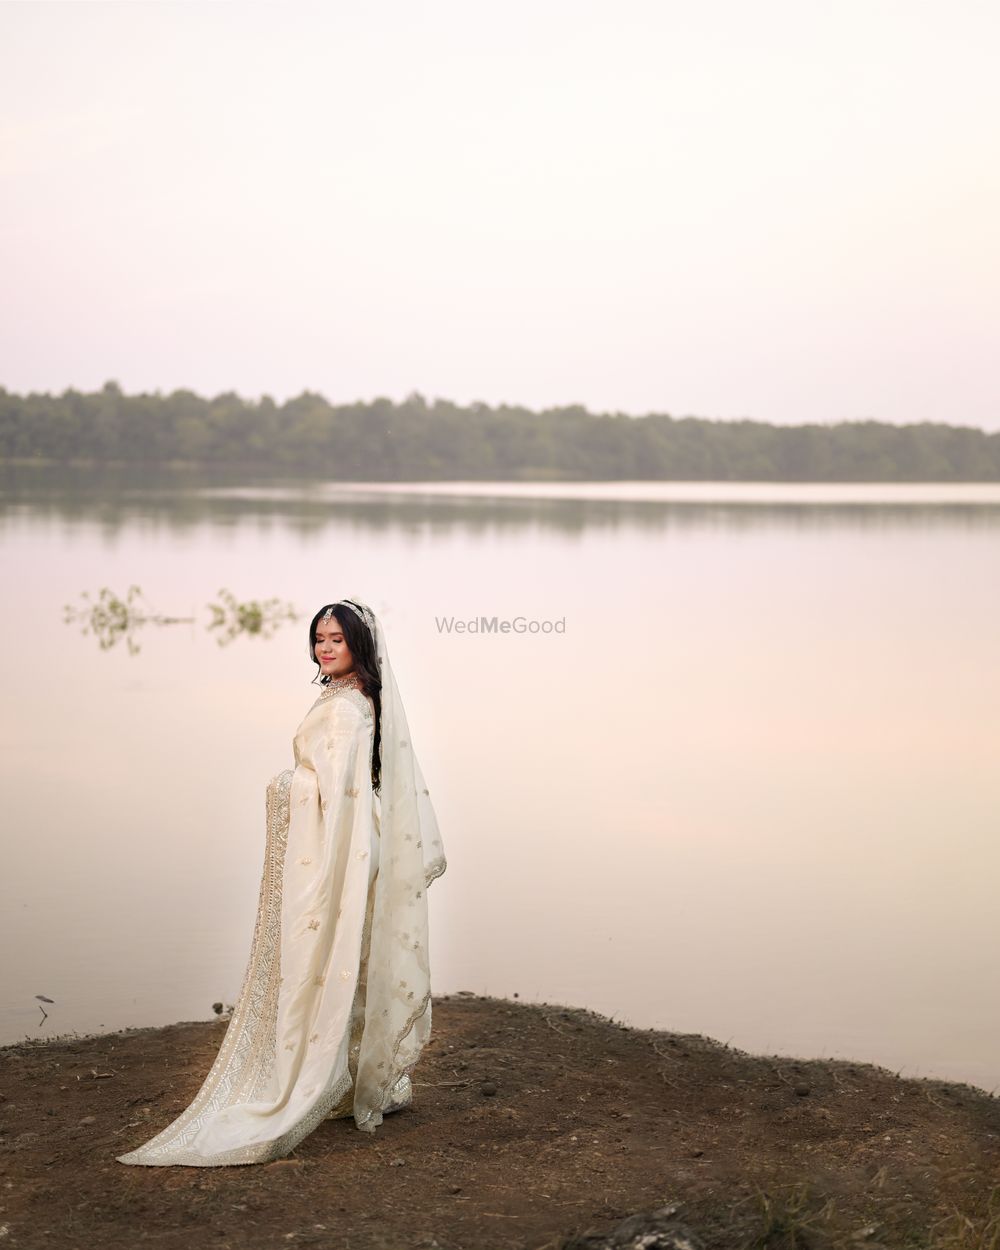 Photo From Priyanka & Ankush Wedding - By Camerography